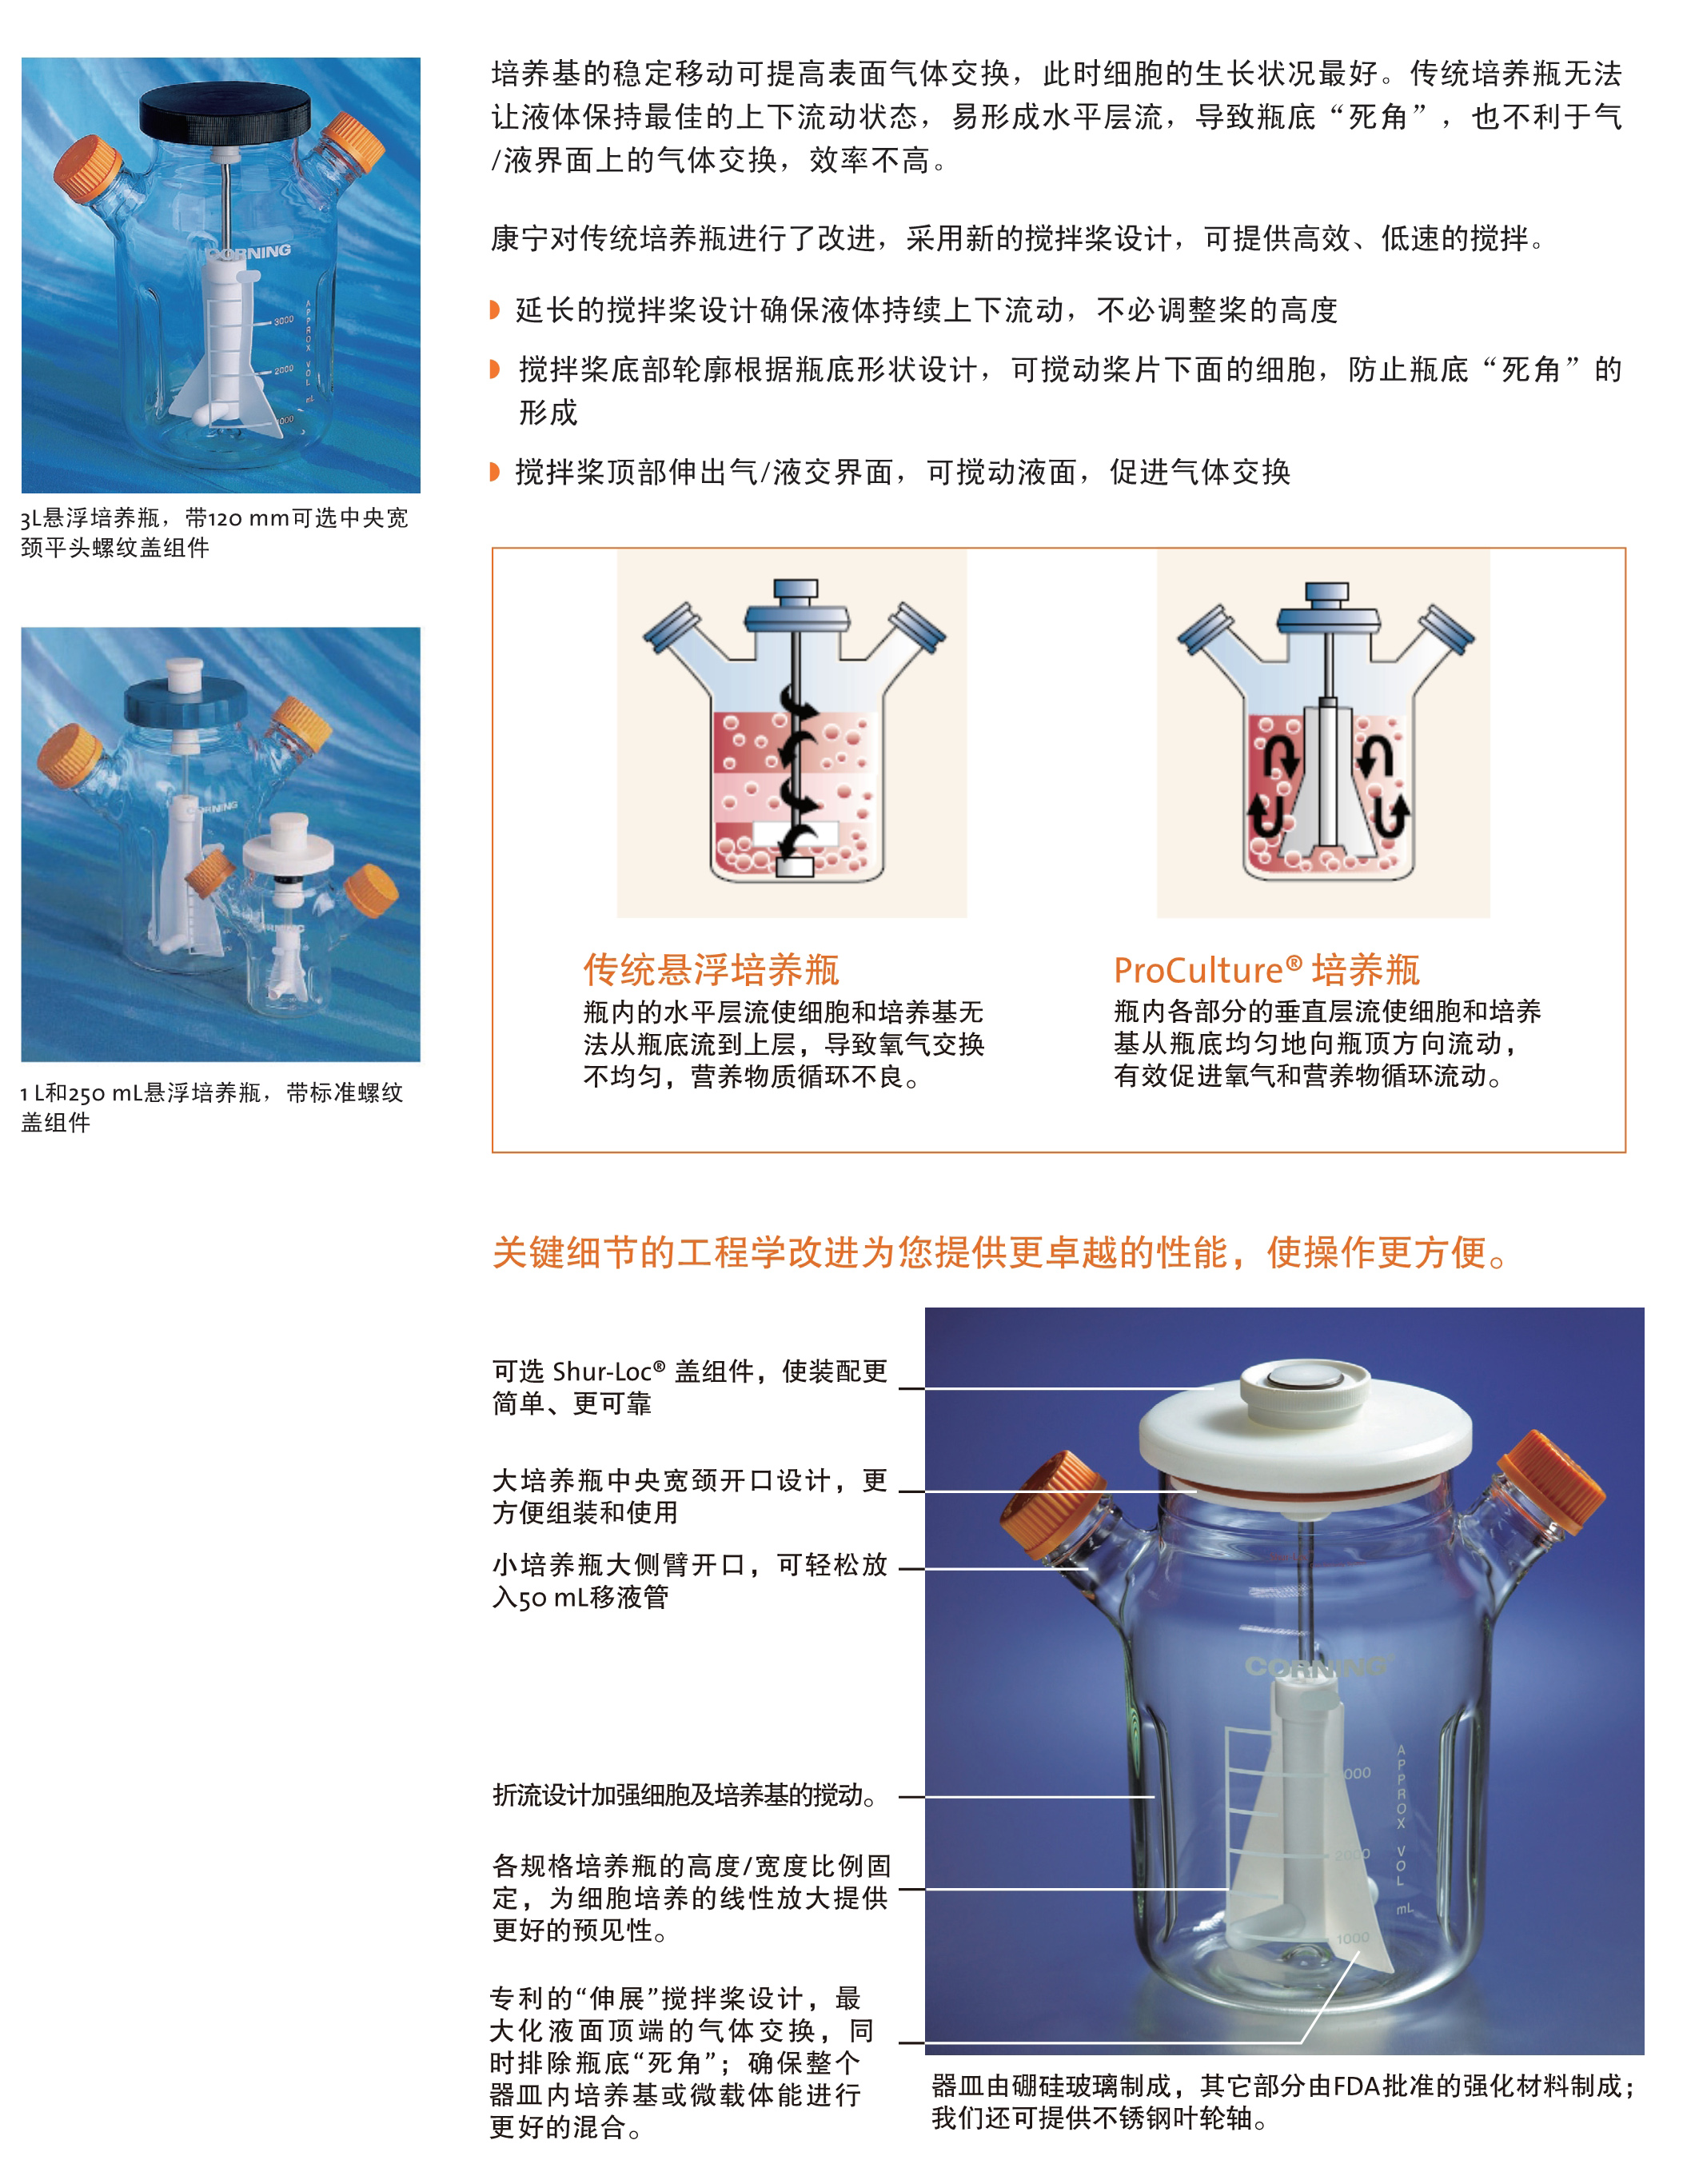 ProCulture® Spinner Flask 悬浮细胞培养瓶